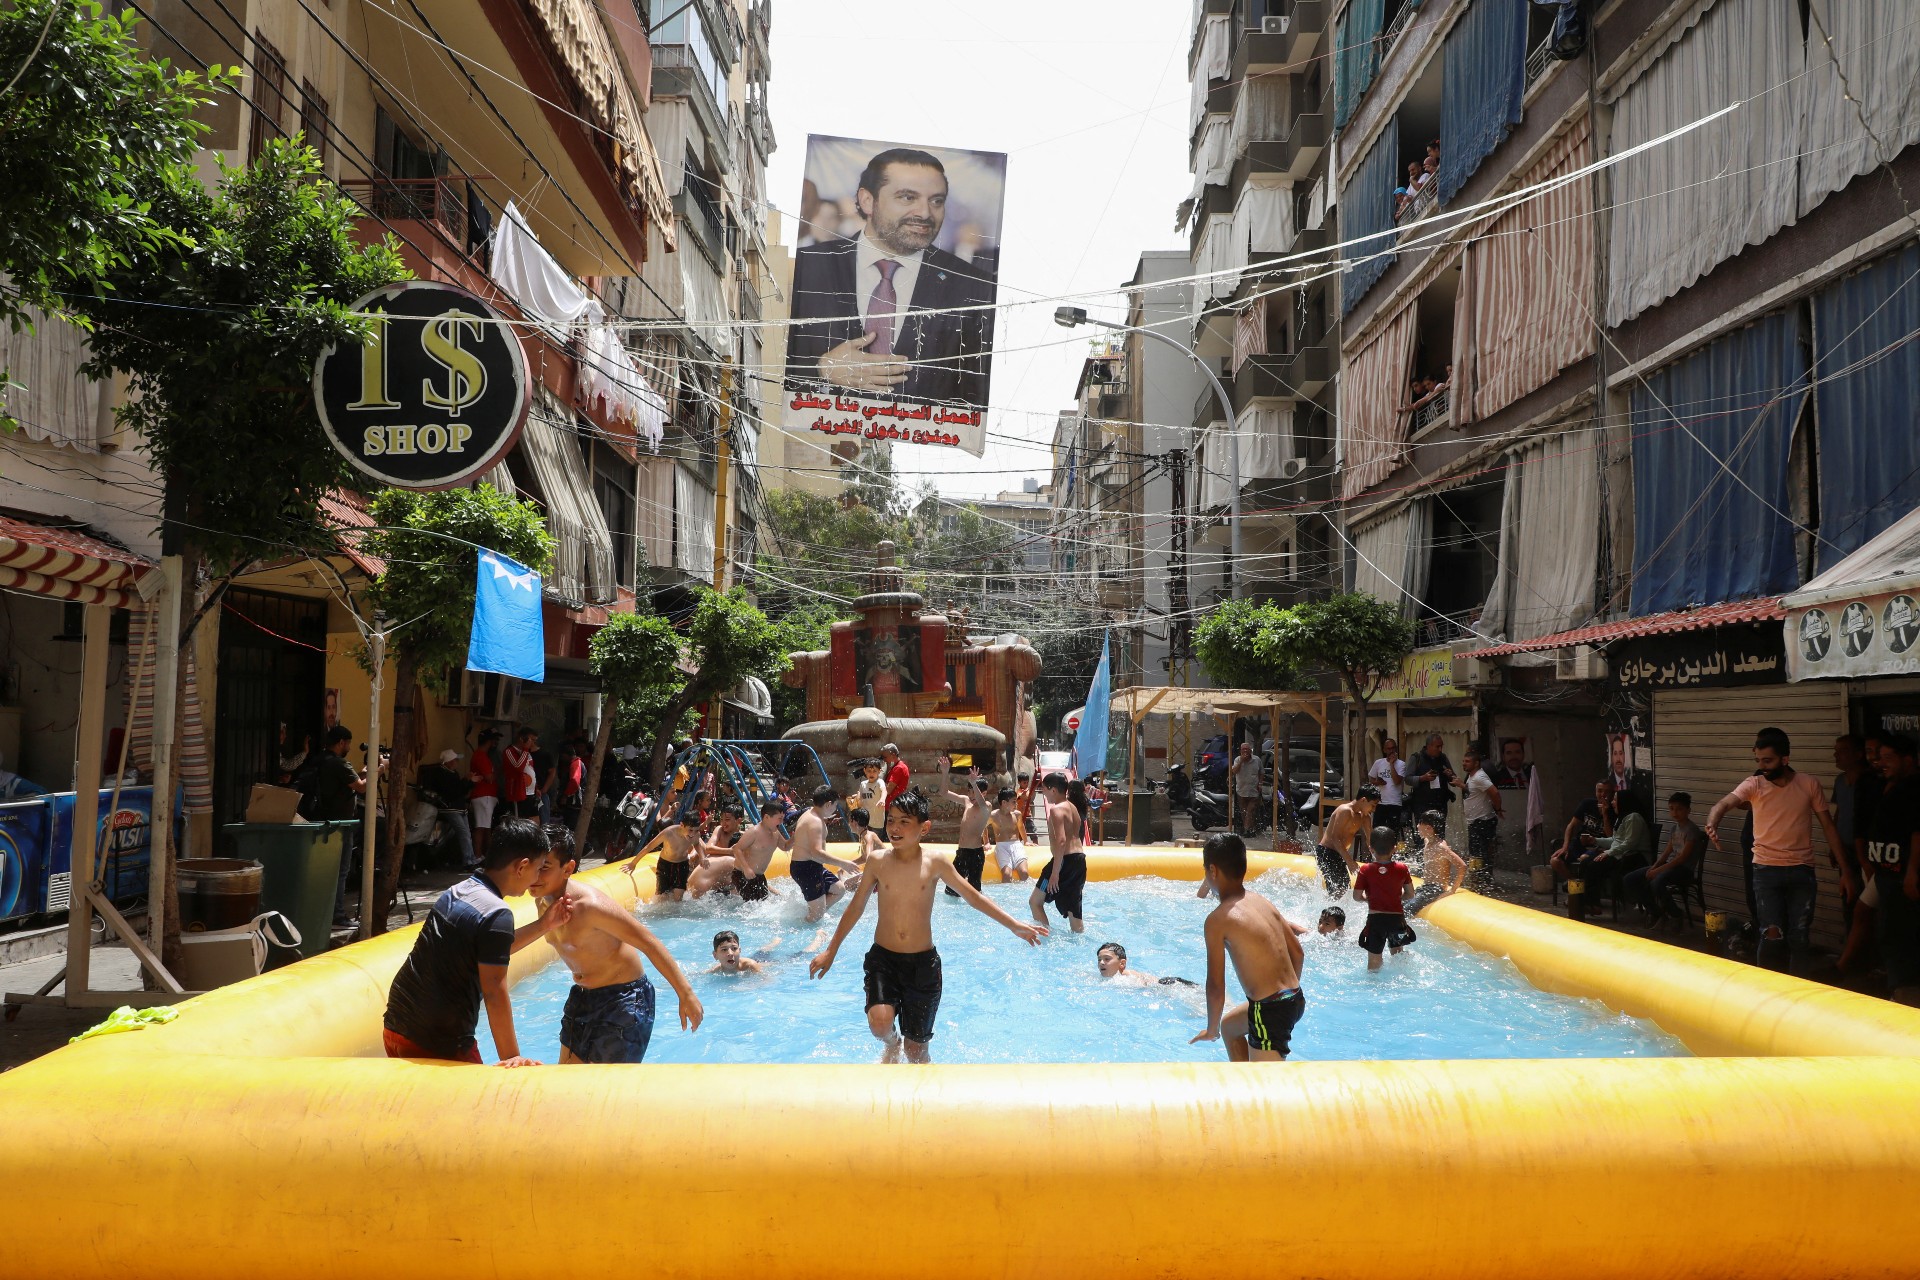 A poster depicting Lebanon's former Prime Minister Saad al-Hariri hangs as children play in an inflatable pool, in the al-Tariq al-Jadida neighbourhood of Beirut (Reuters)